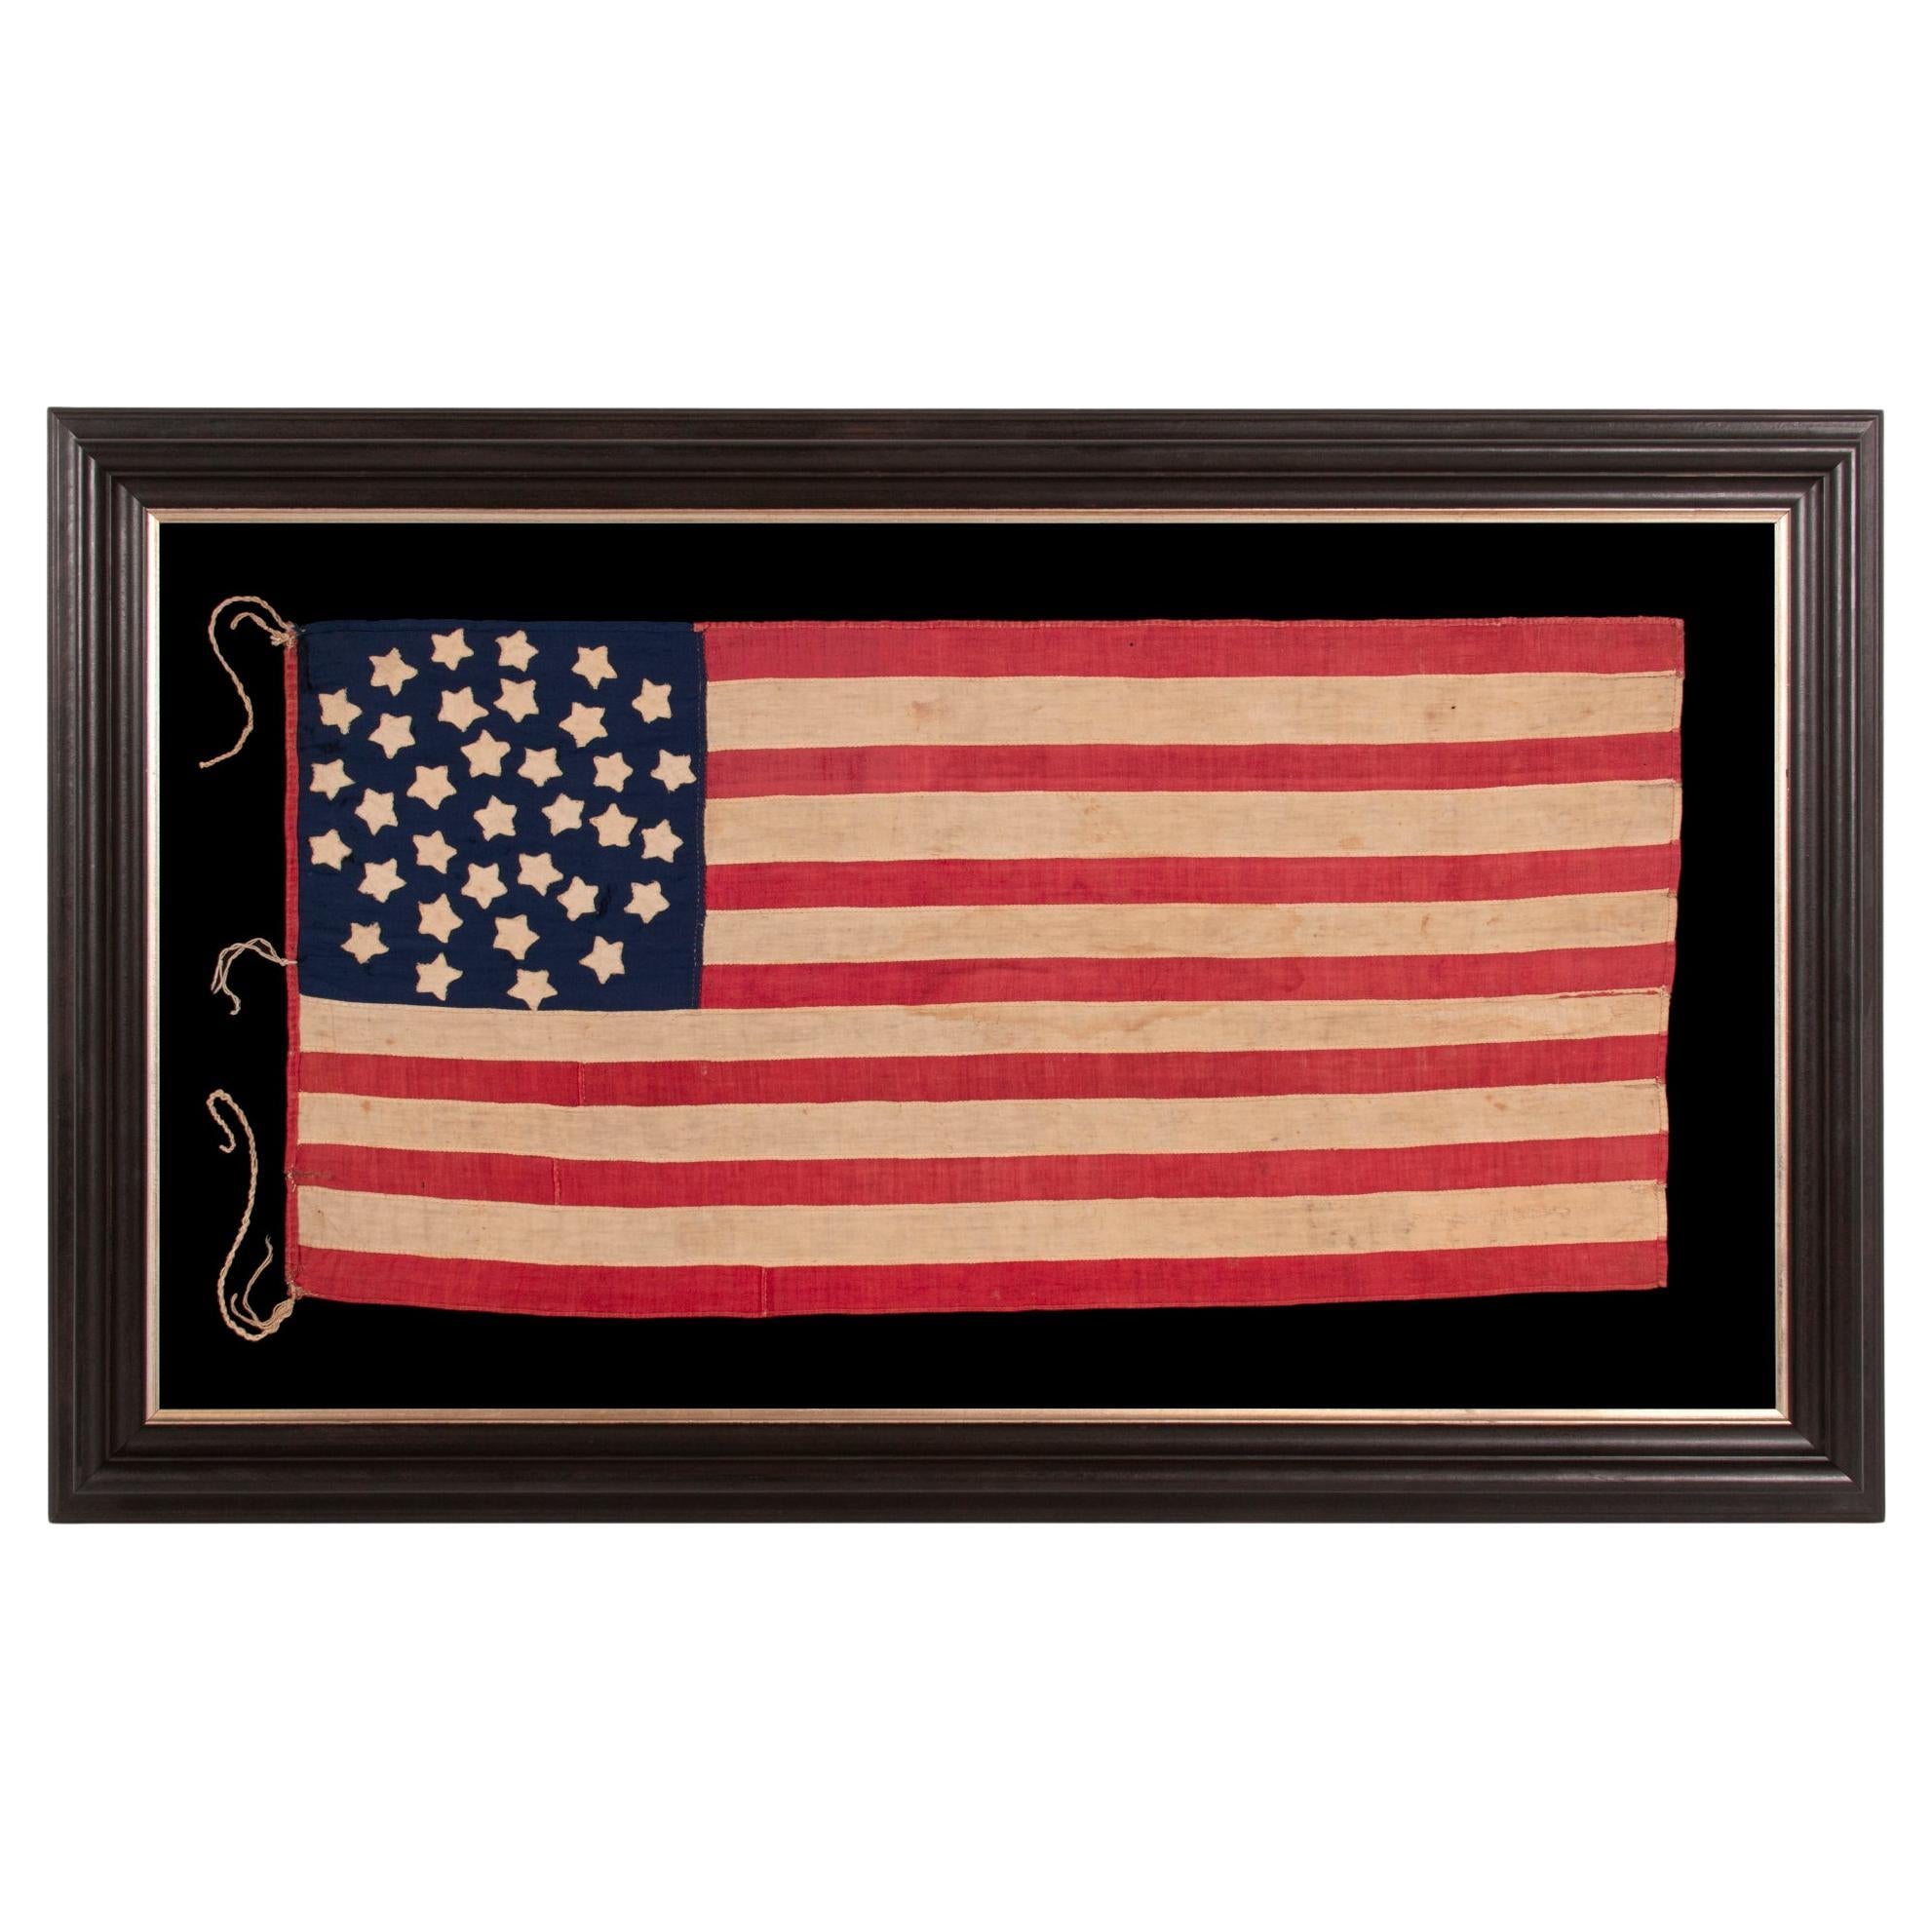 34 STAR AMERICAN FLAG, CIVIL WAR, 1861-63, KANSAS STATEHOOD, 2nd KY CAVALRY